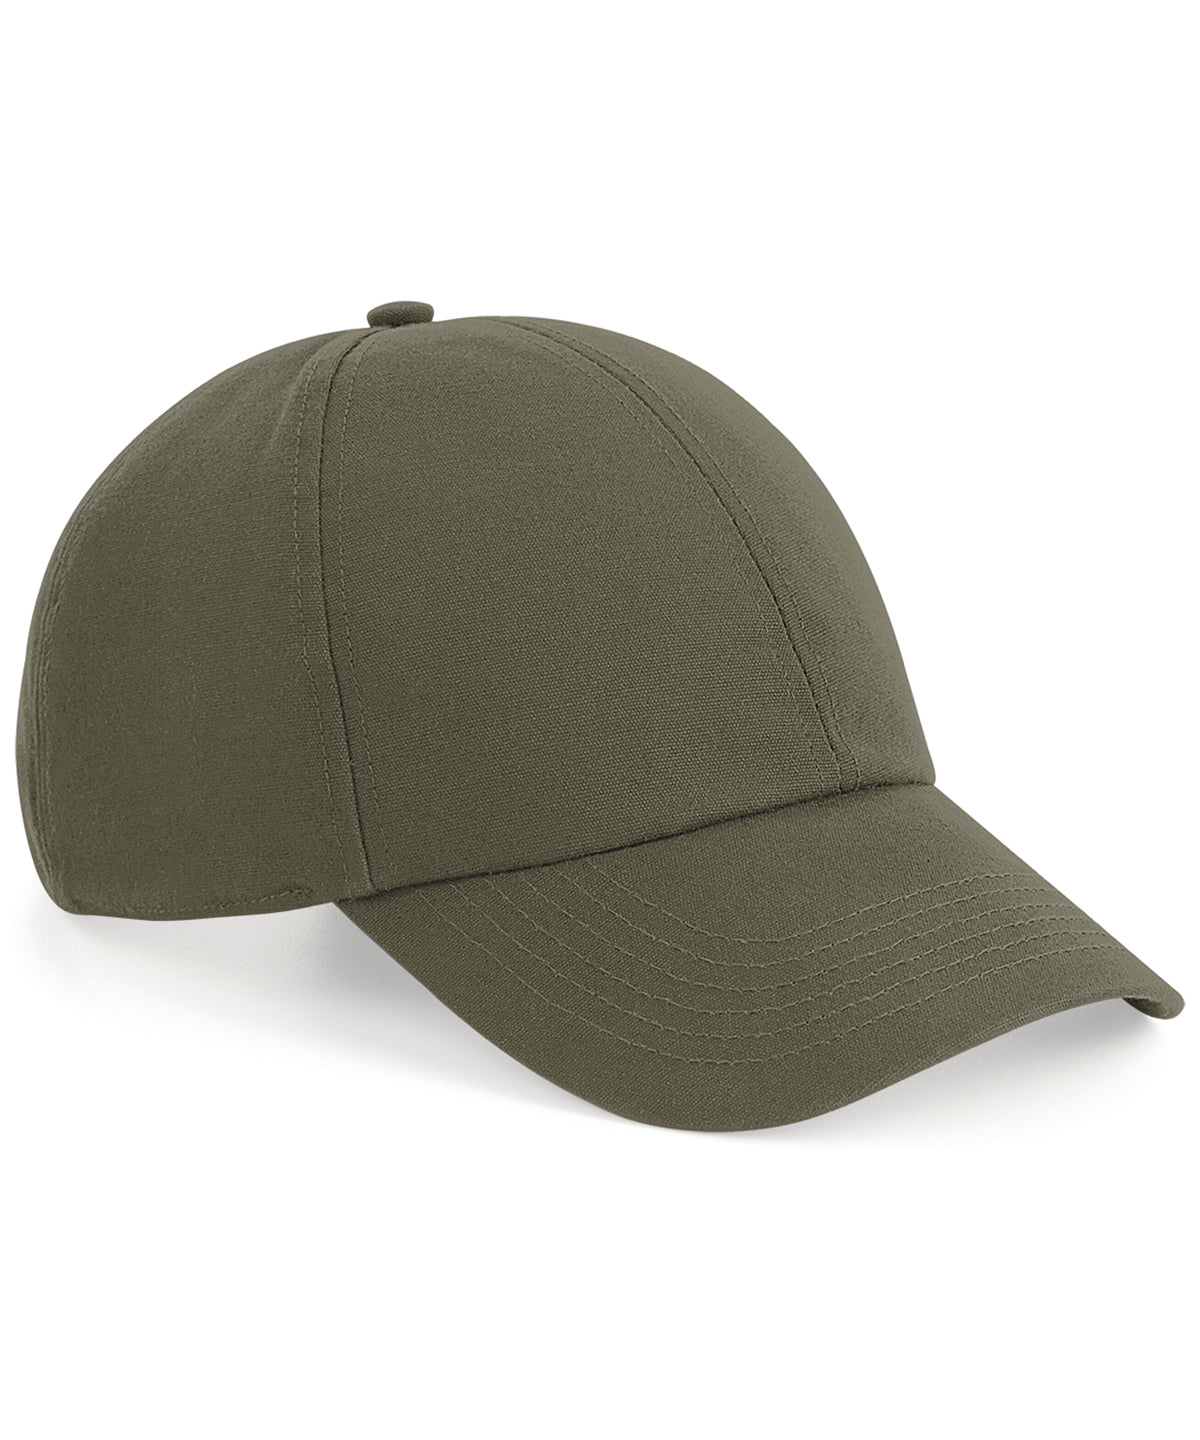 Personalised Caps - Olive Beechfield Organic cotton 6-panel cap